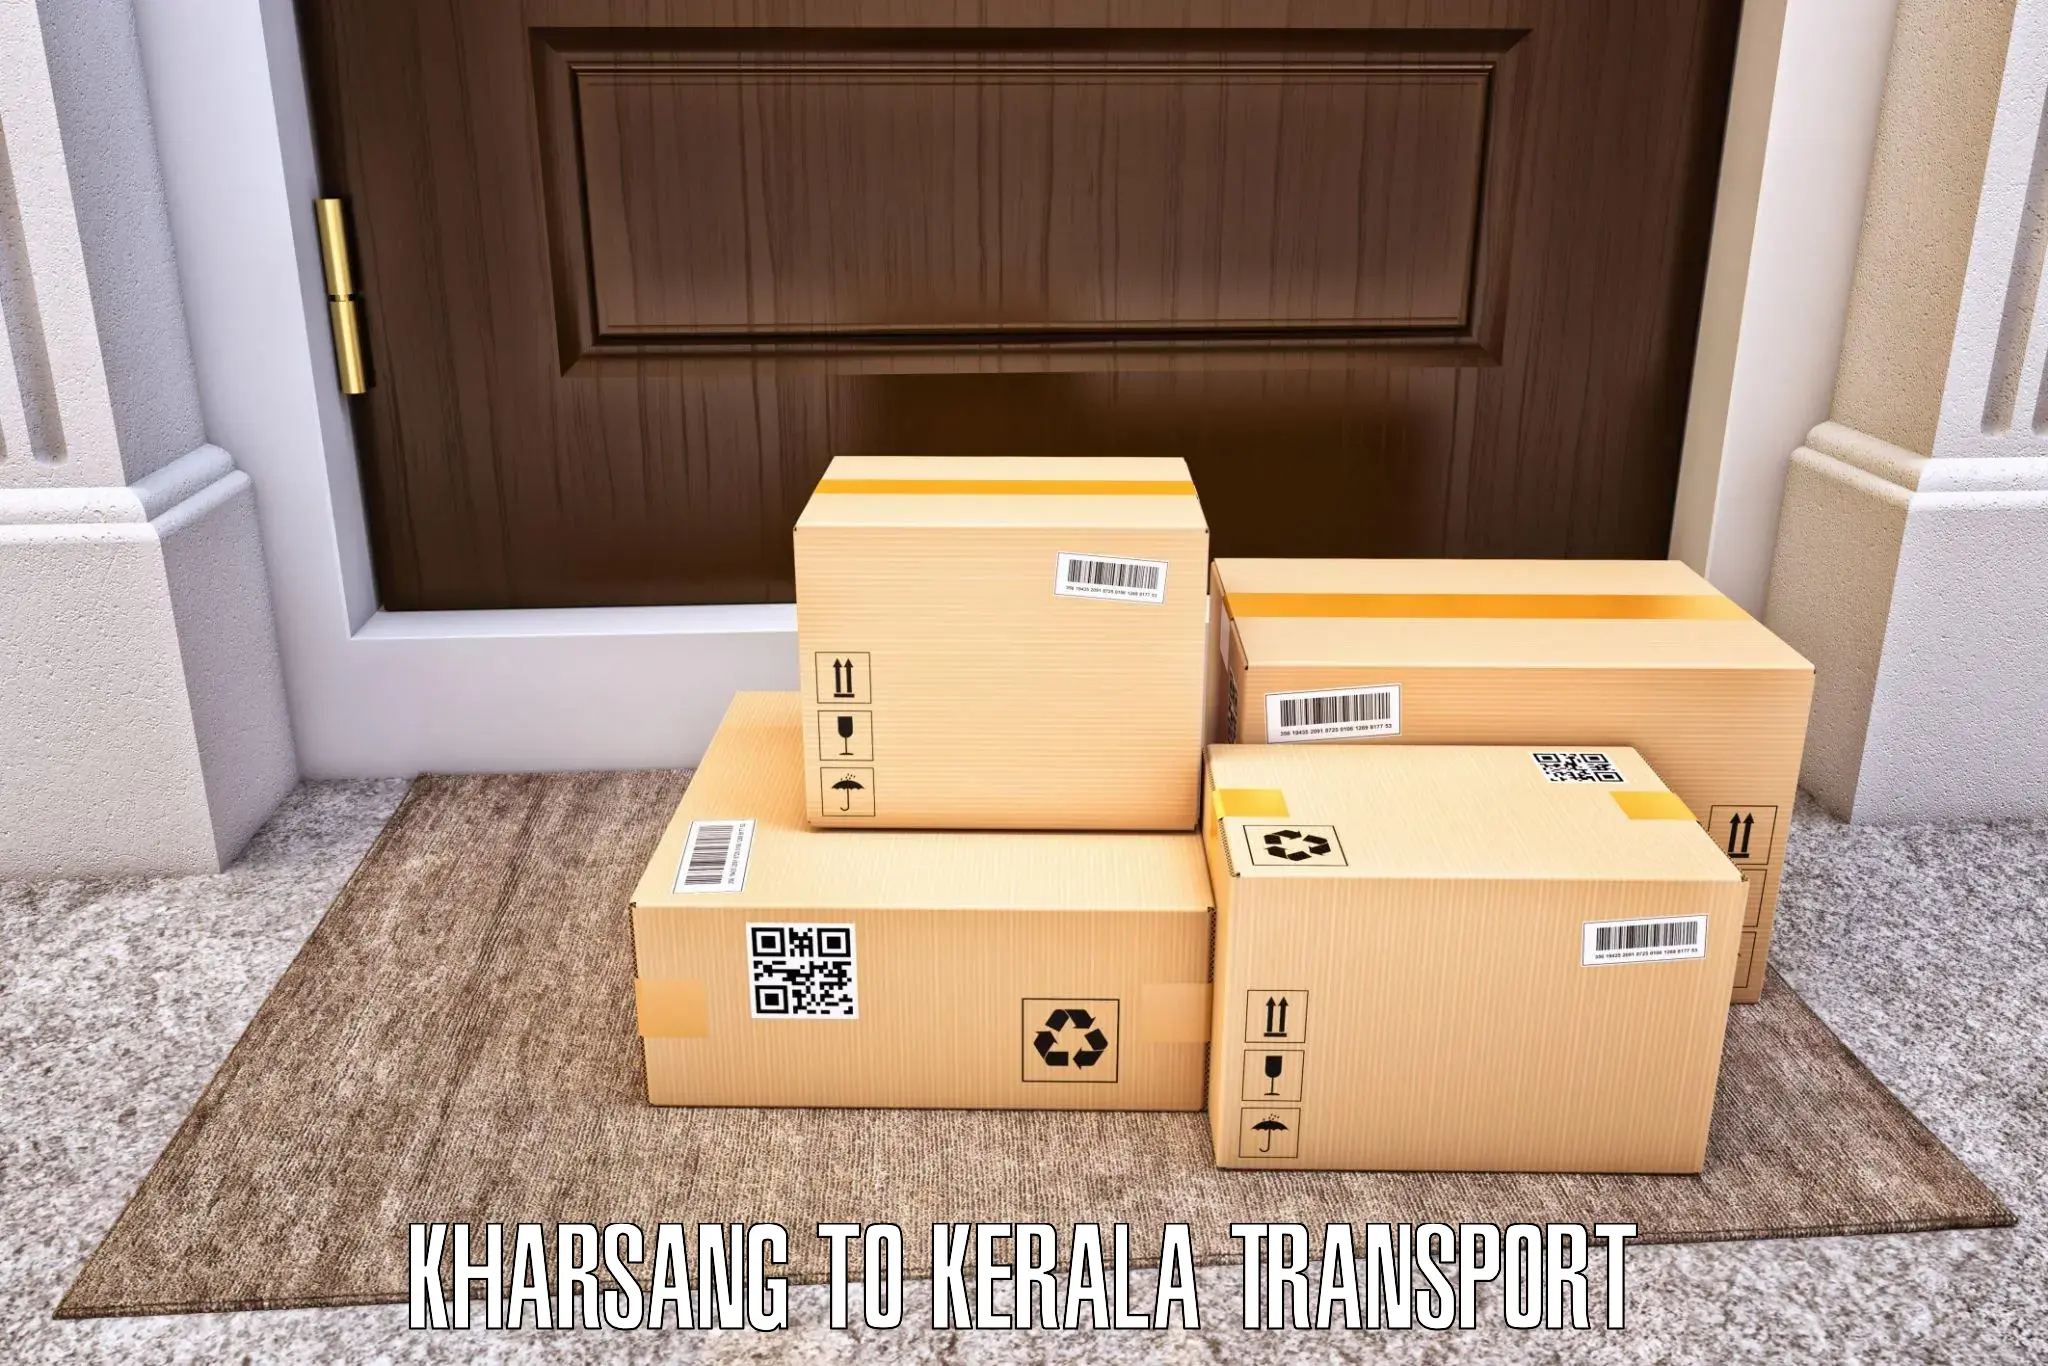 Transport shared services Kharsang to Malappuram